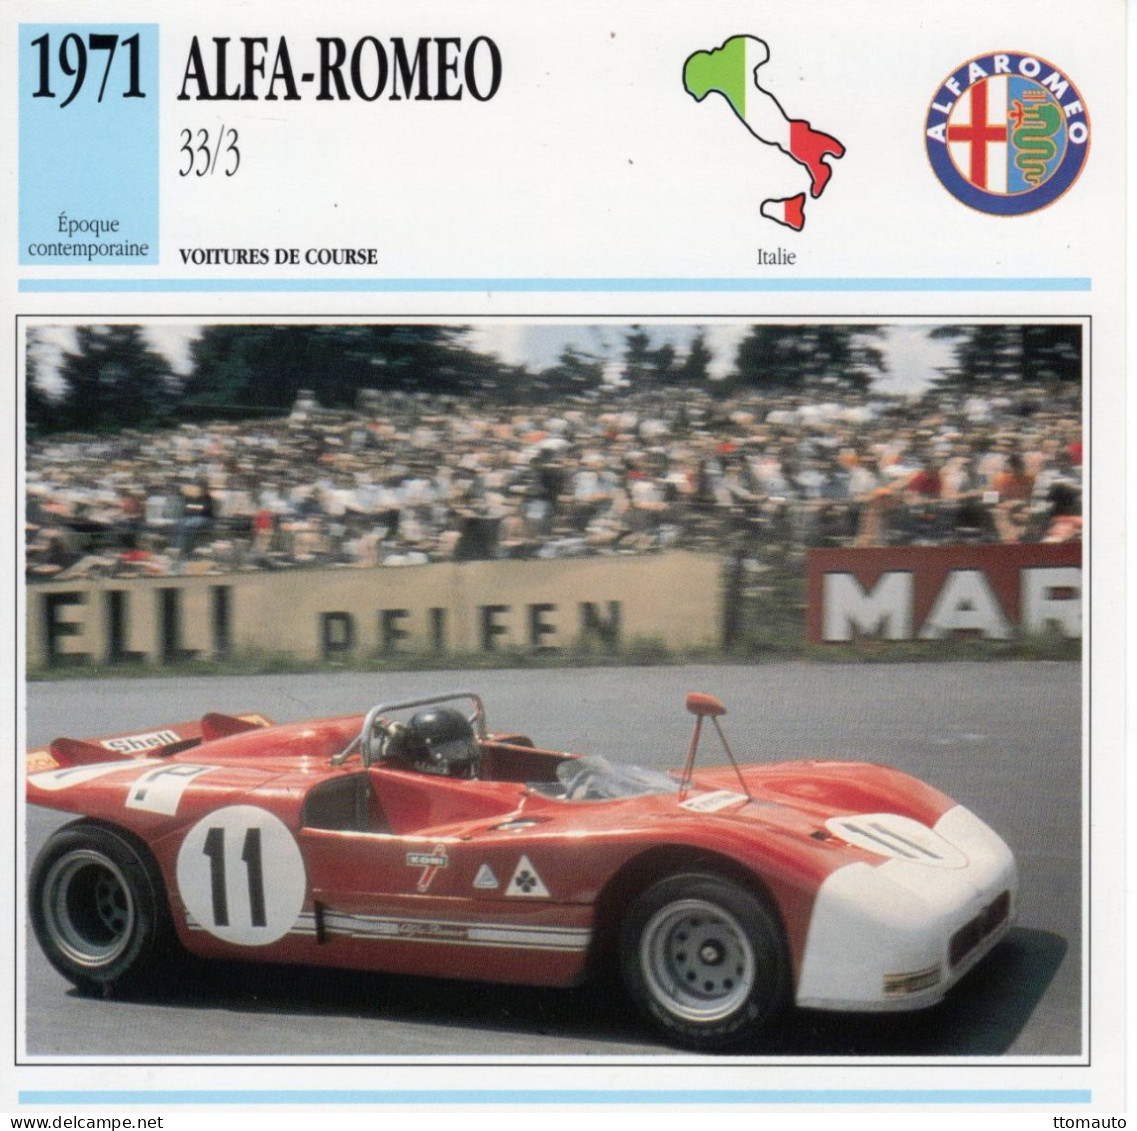 Alfa Romeo 33/3  -  1971  - Voiture De Course -  Fiche Technique Automobile (I) - Cars